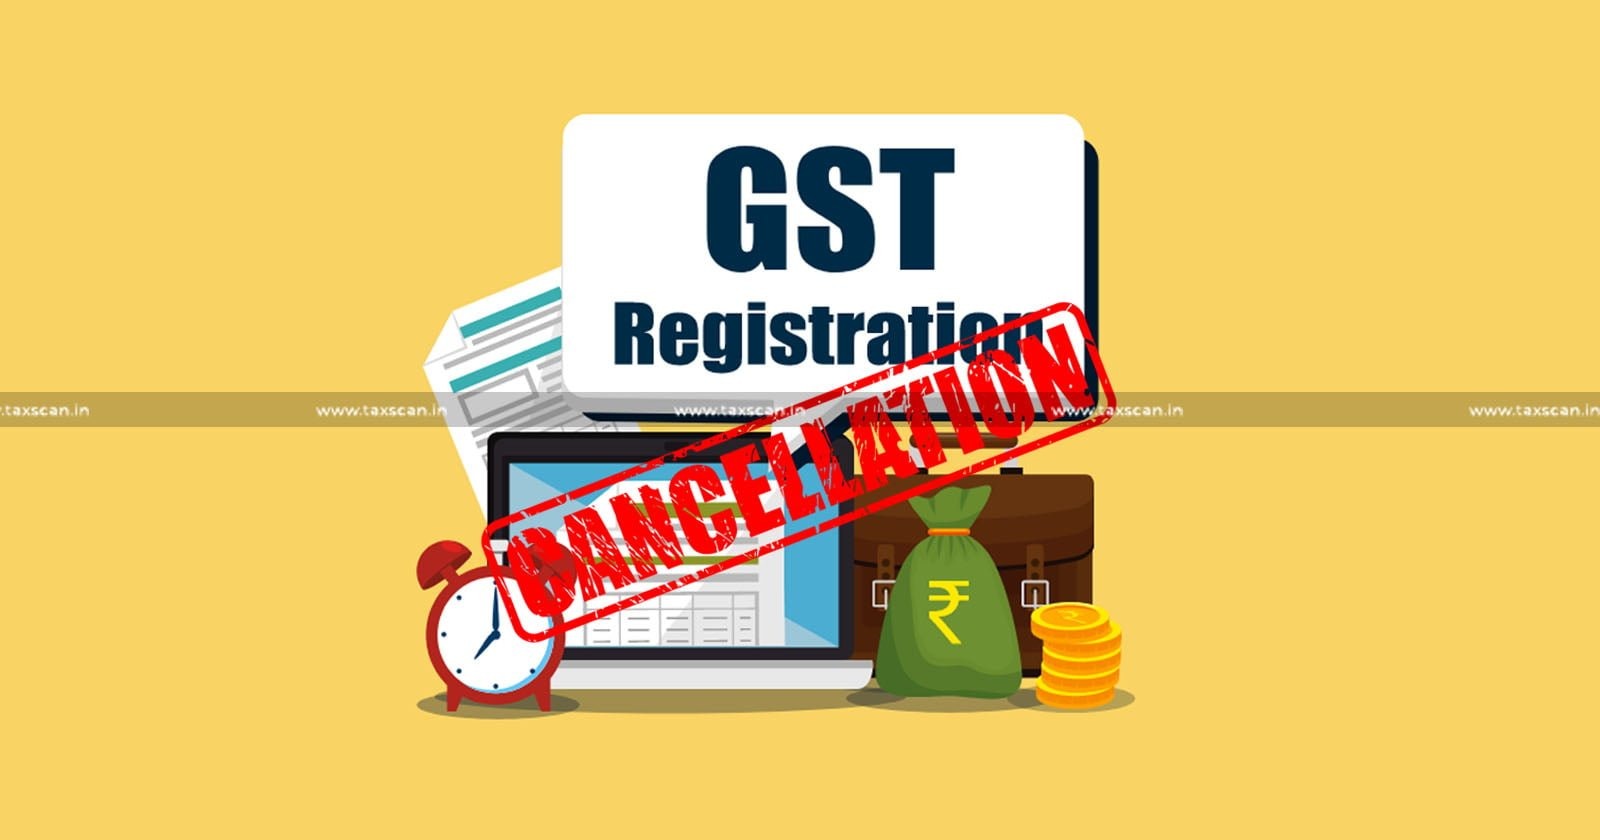 Delhi HC - Delhi High Court recent tax news - GST Registration - taxscan